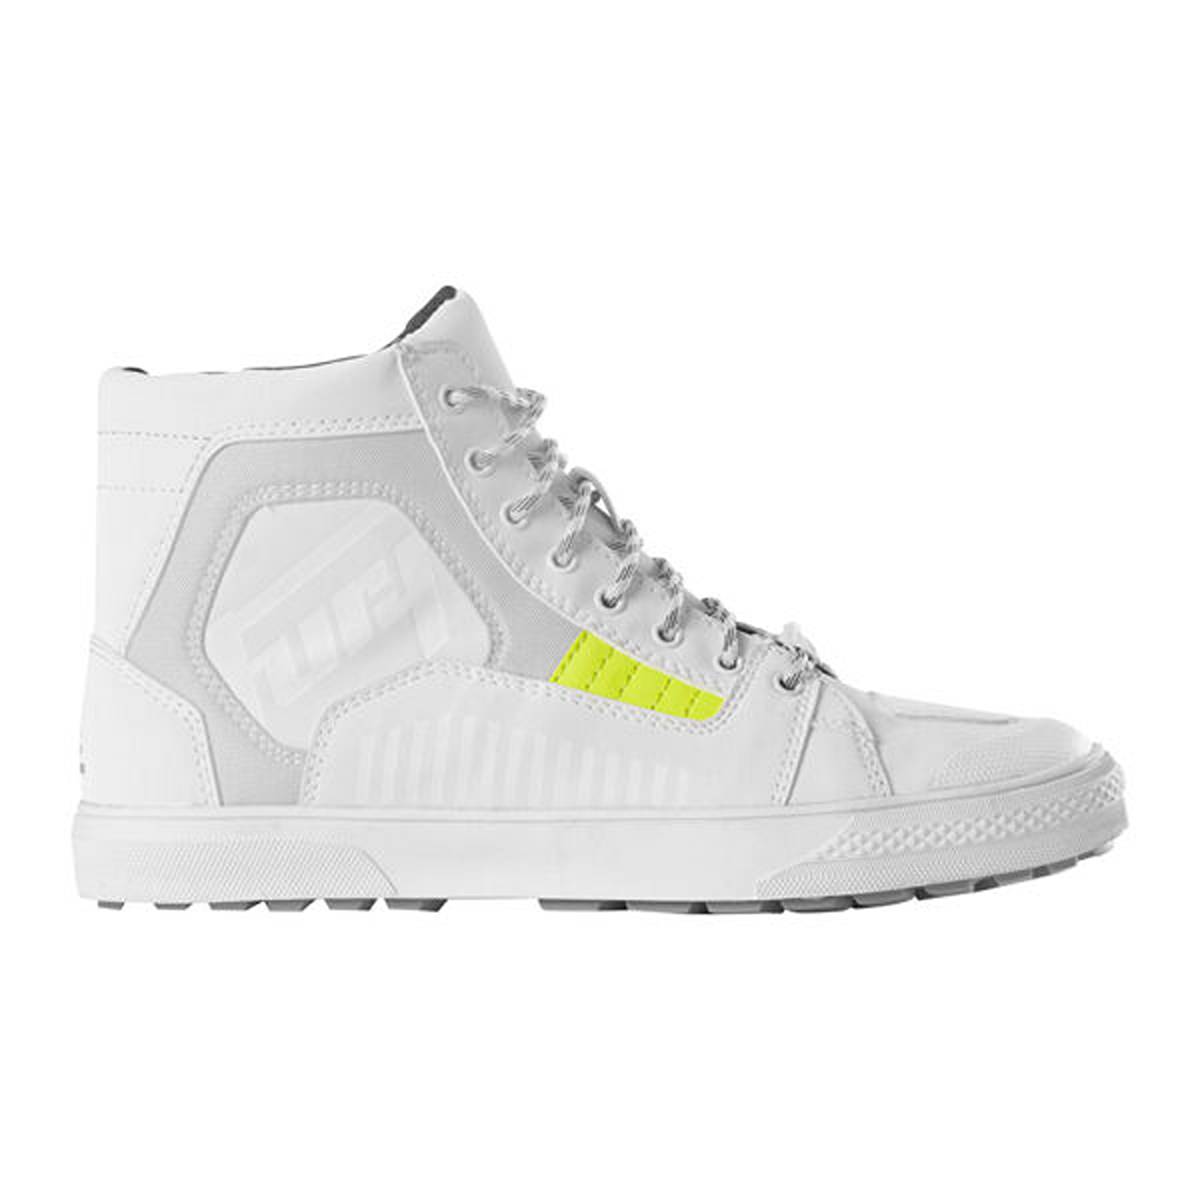 Image of Furygan Sacramento D30 Shoes White Grey Size 46 ID 3435980368180